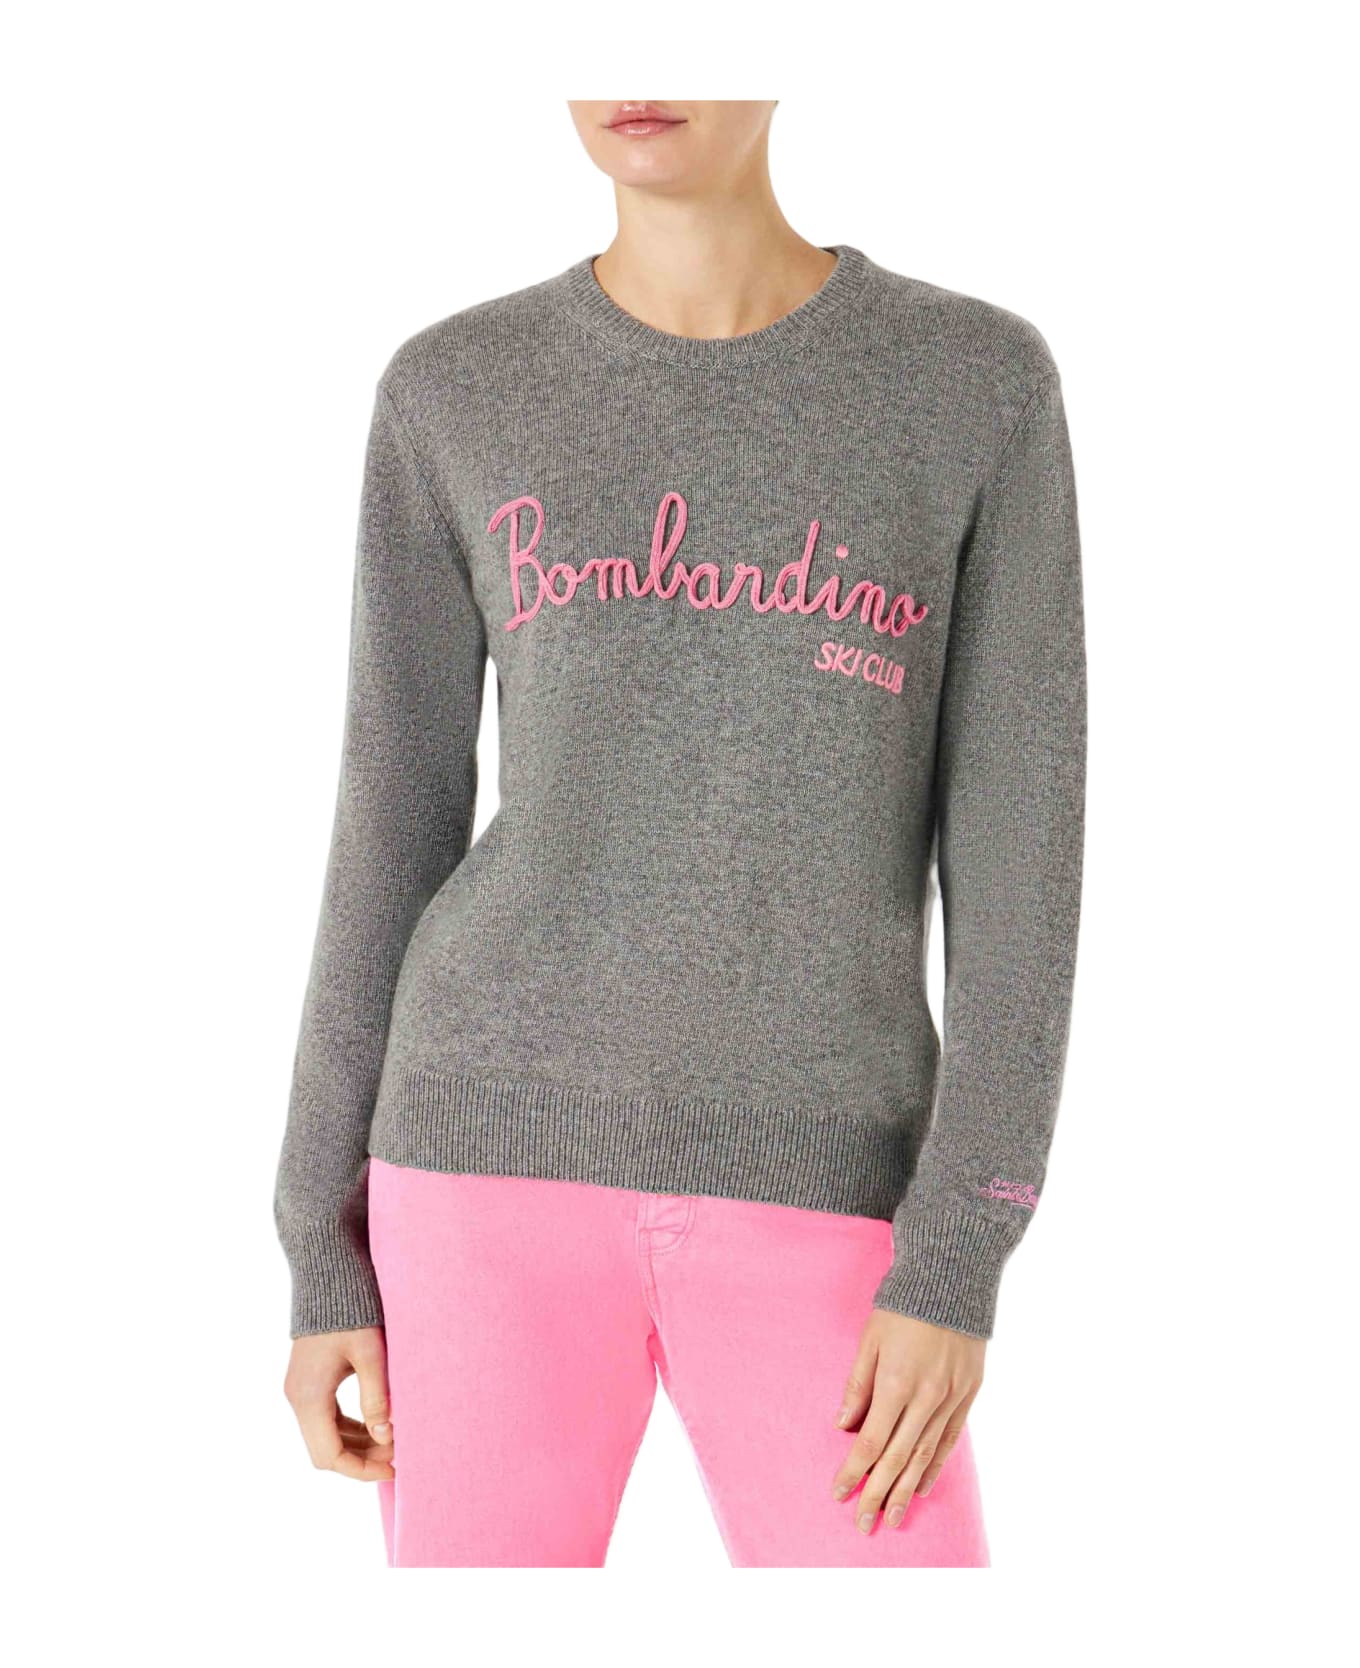 MC2 Saint Barth Woman Sweater With Bombardino Ski Club Embroidery - GREY